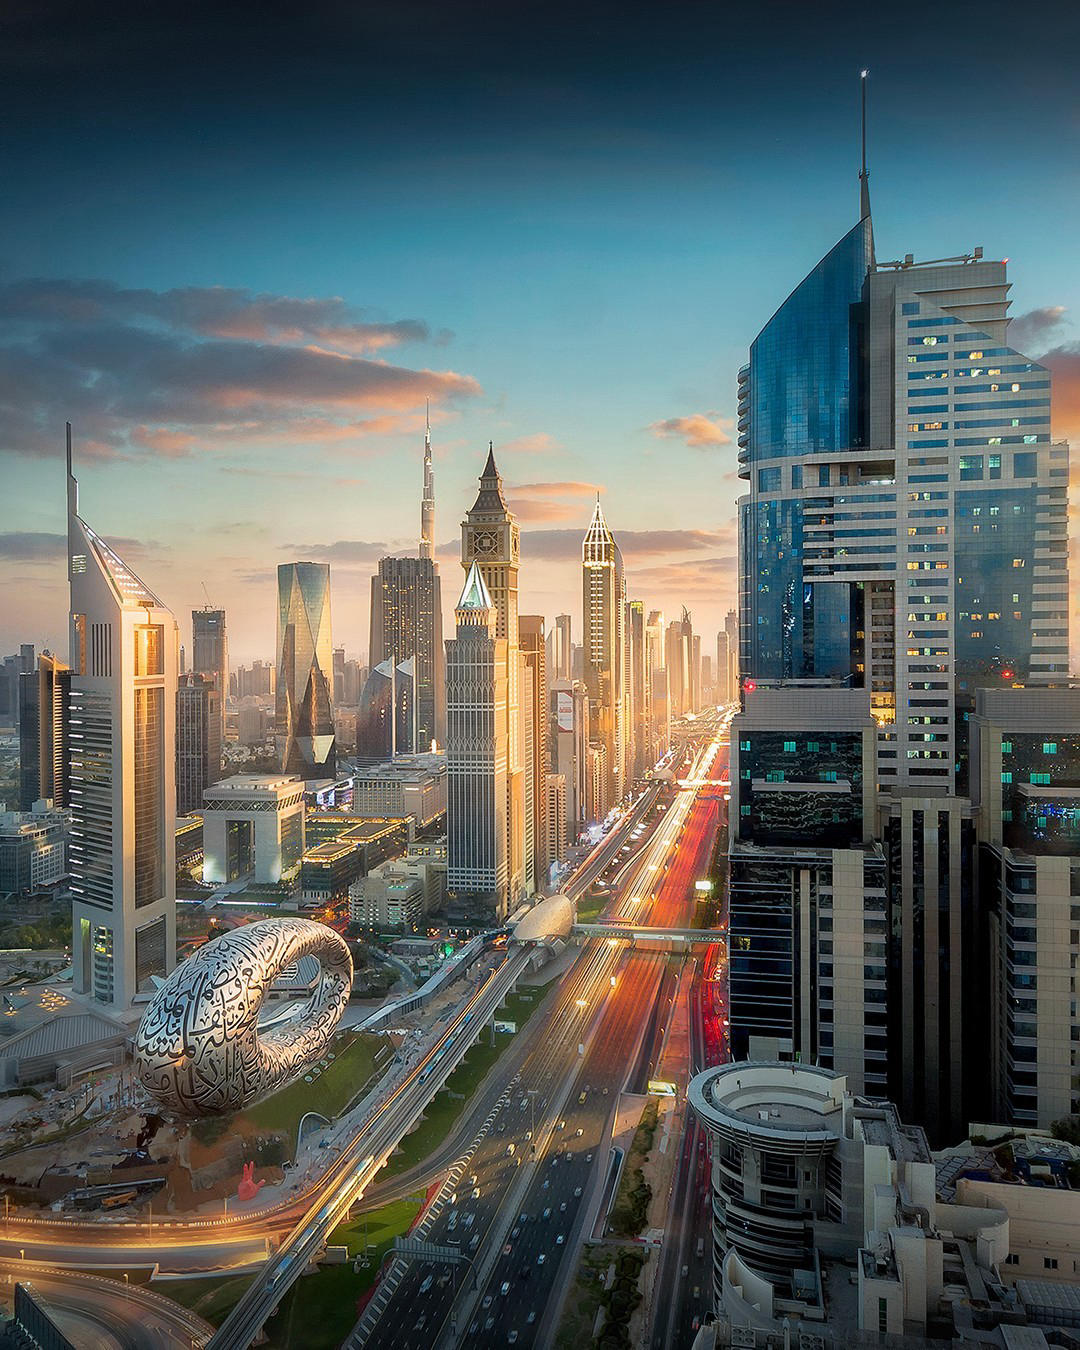 Emirates - Day or night, Dubai shines bright